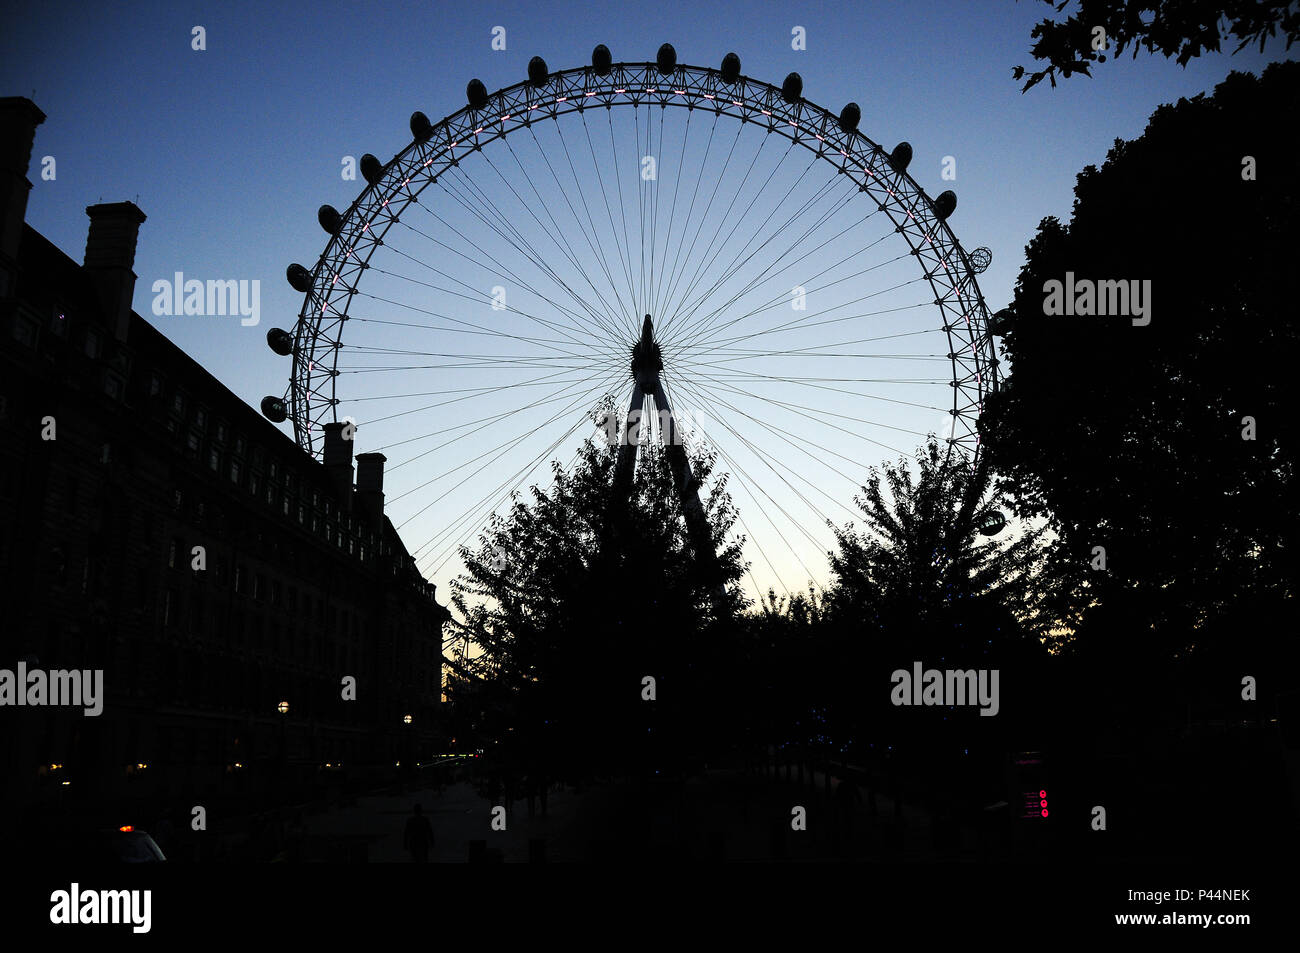 Belo entardecer em london Eye, Londres, Reino Unido - 02/09/2010 - Foto: André Stefano / Fotoarena Stock Photo